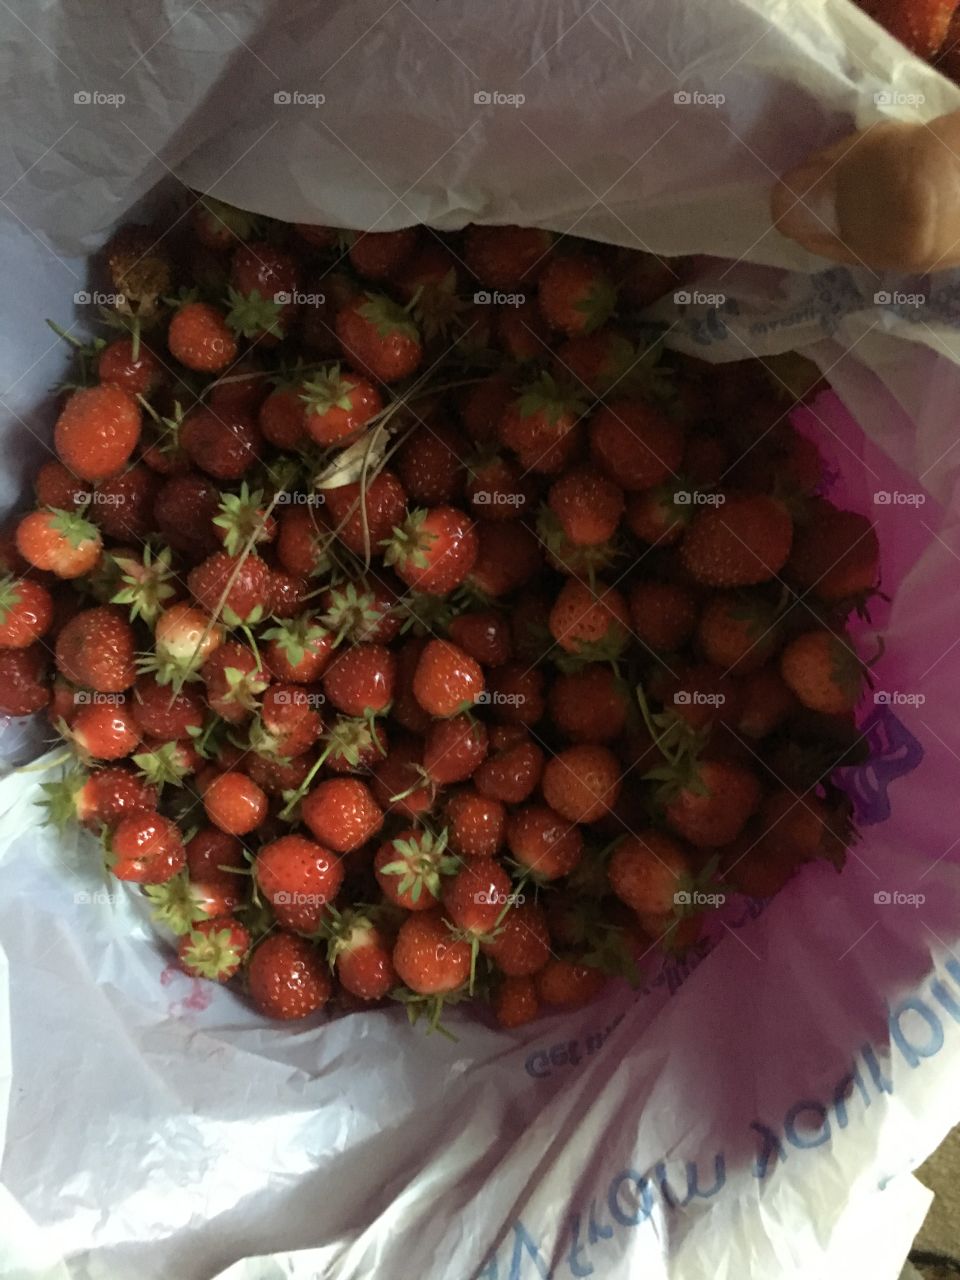 Bunch of strawberries - harvest